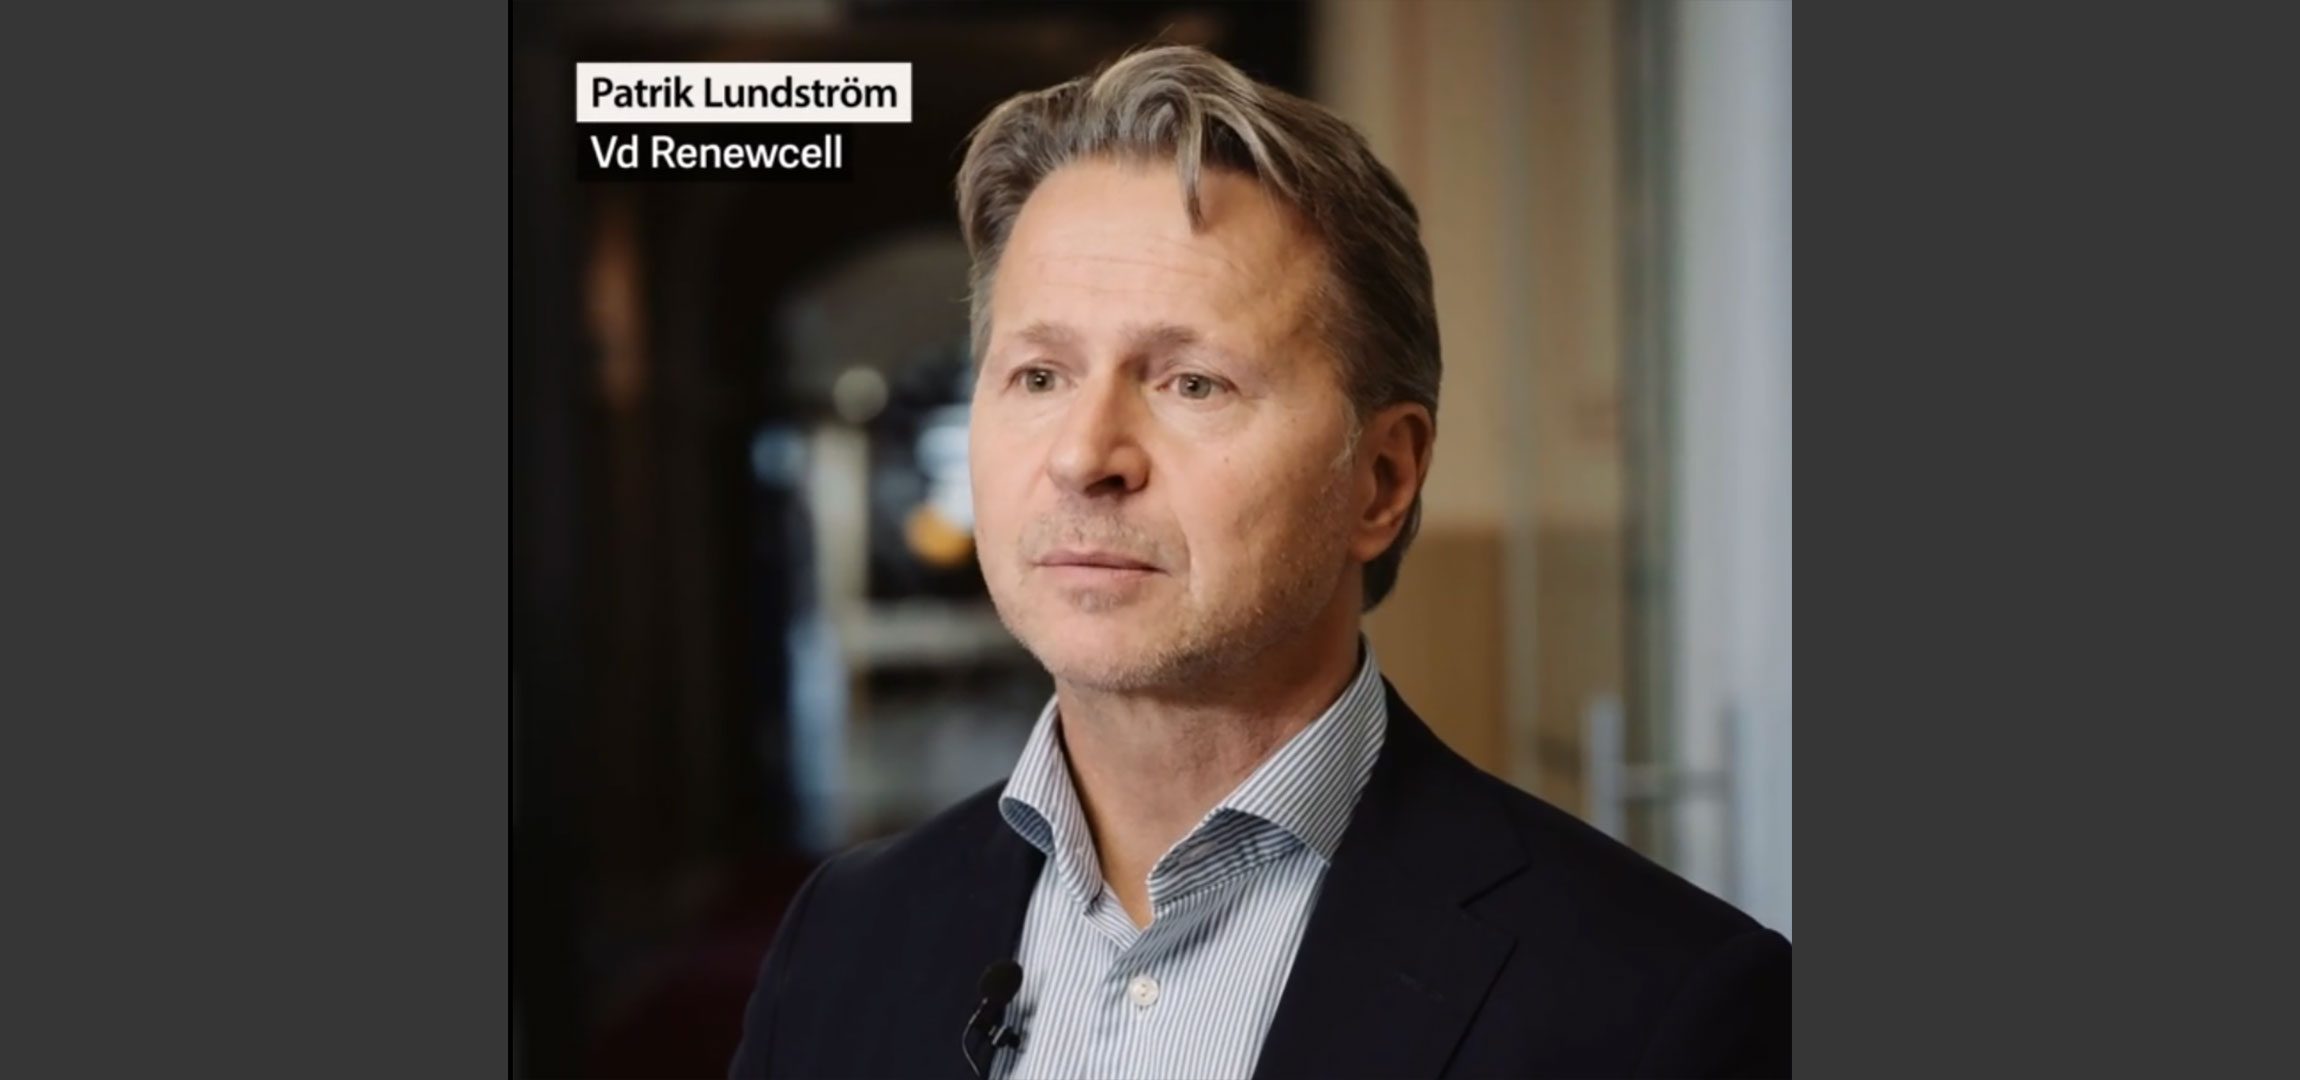 Patrik Lundström